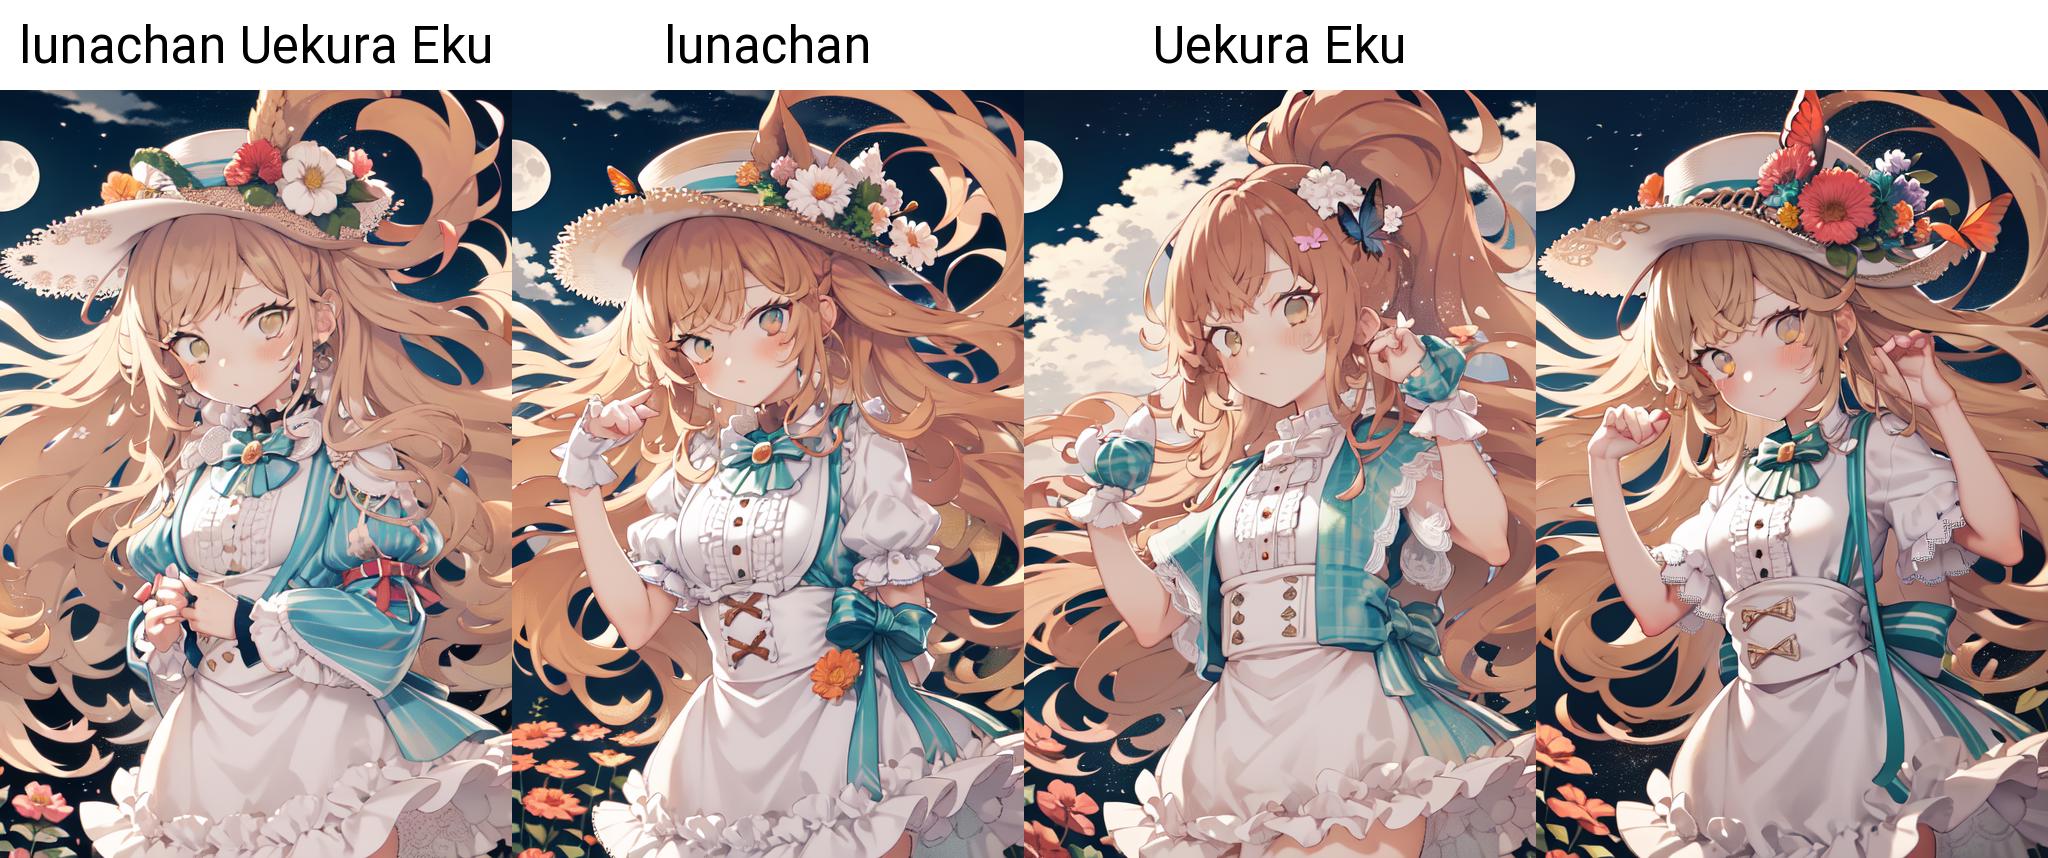 Luna's Uekura Eku Style Lora image by lunachan